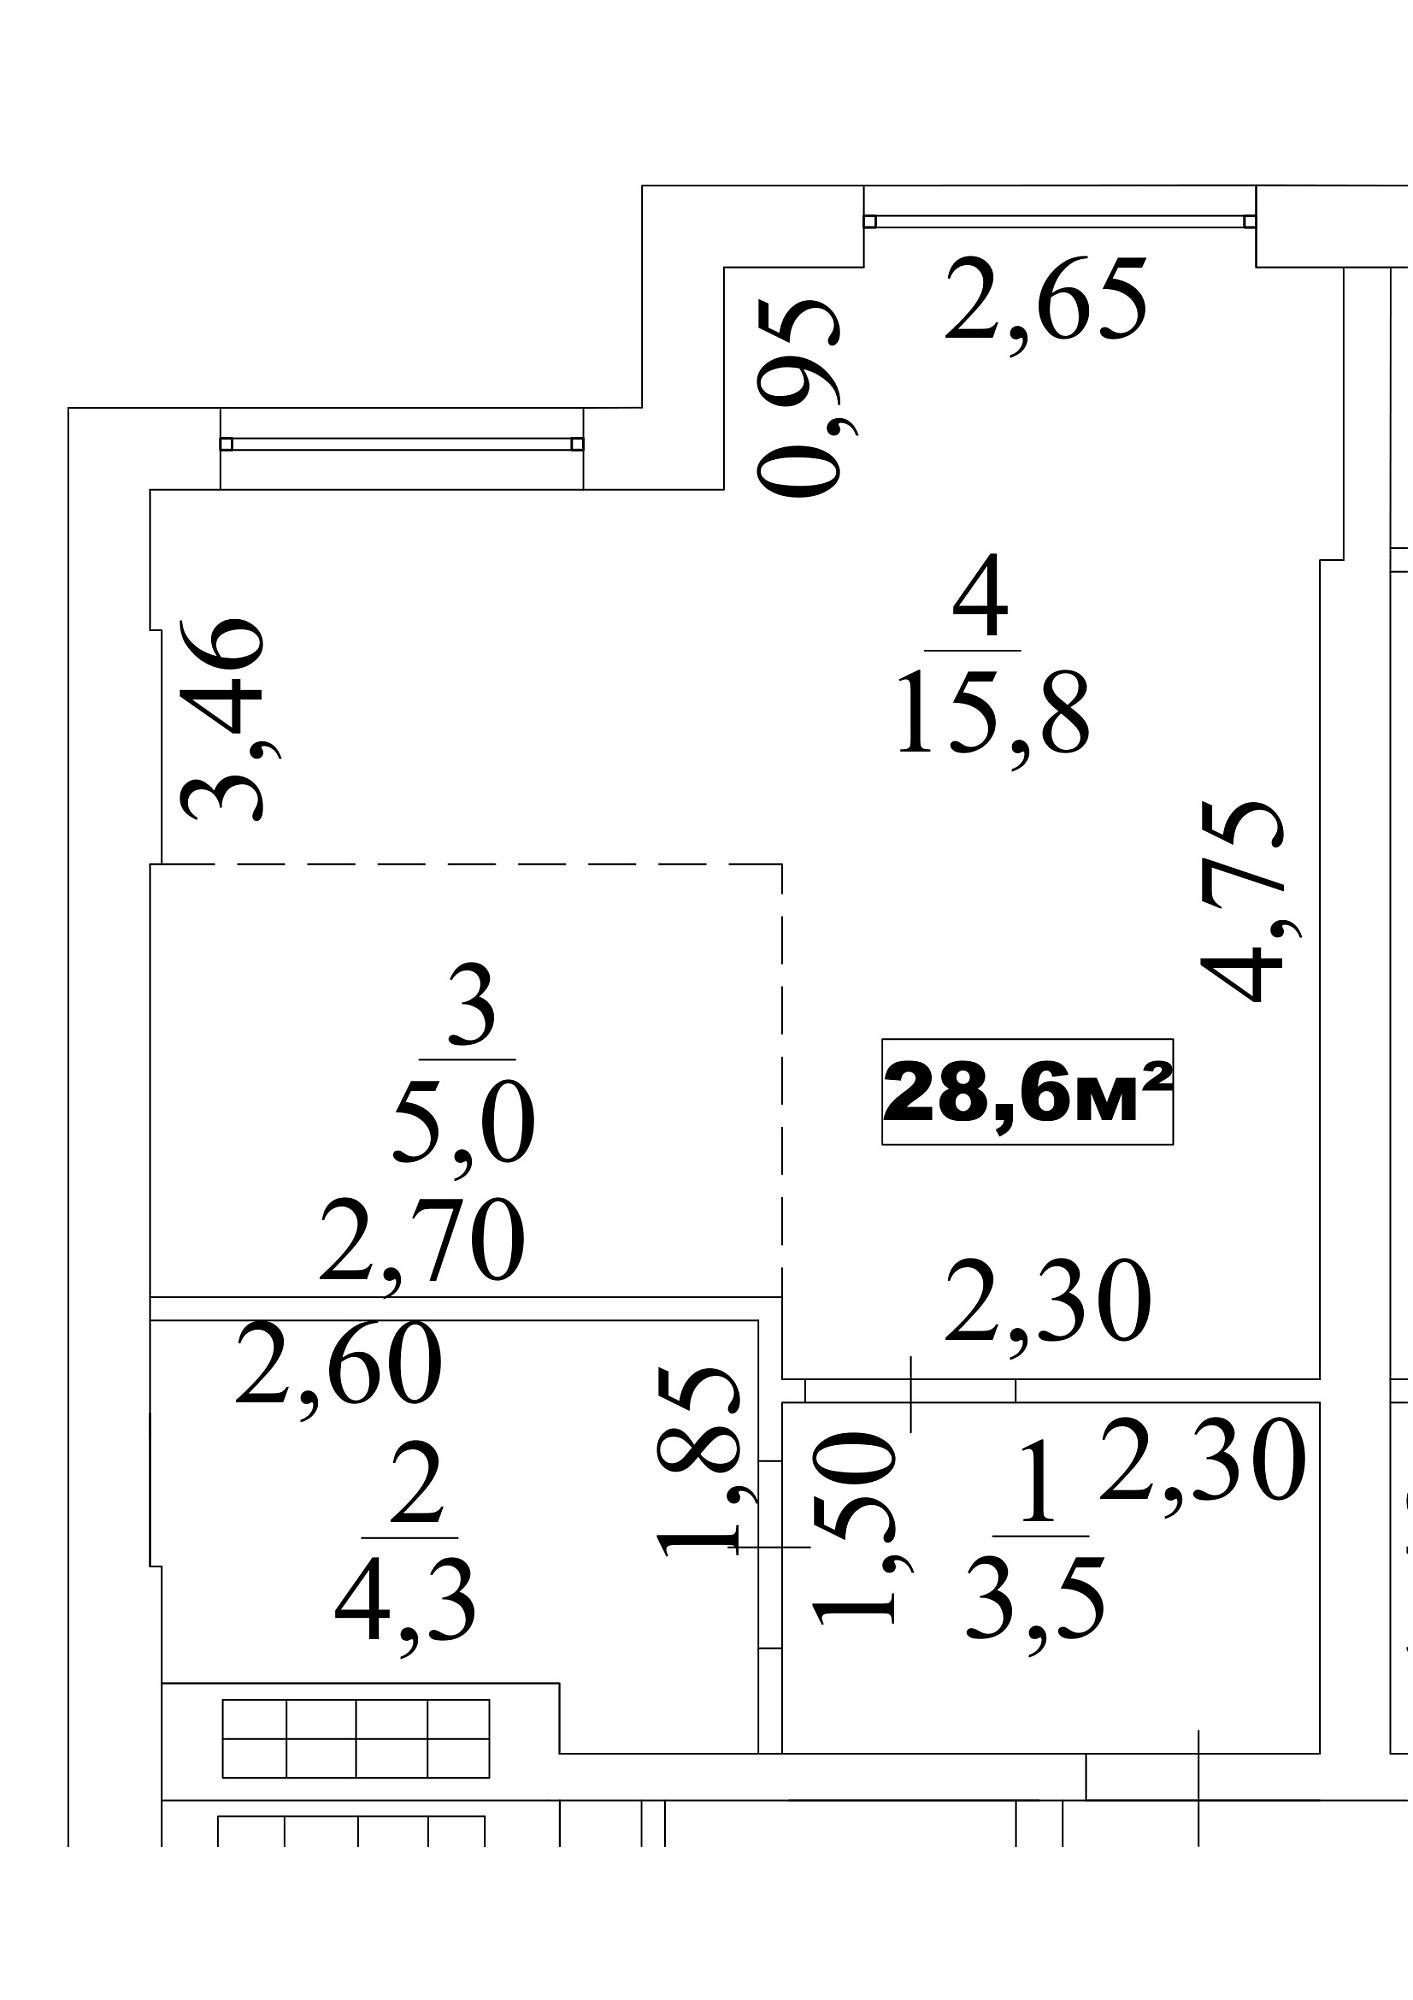 Планировка Smart-квартира площей 28.6м2, AB-10-01/0003б.